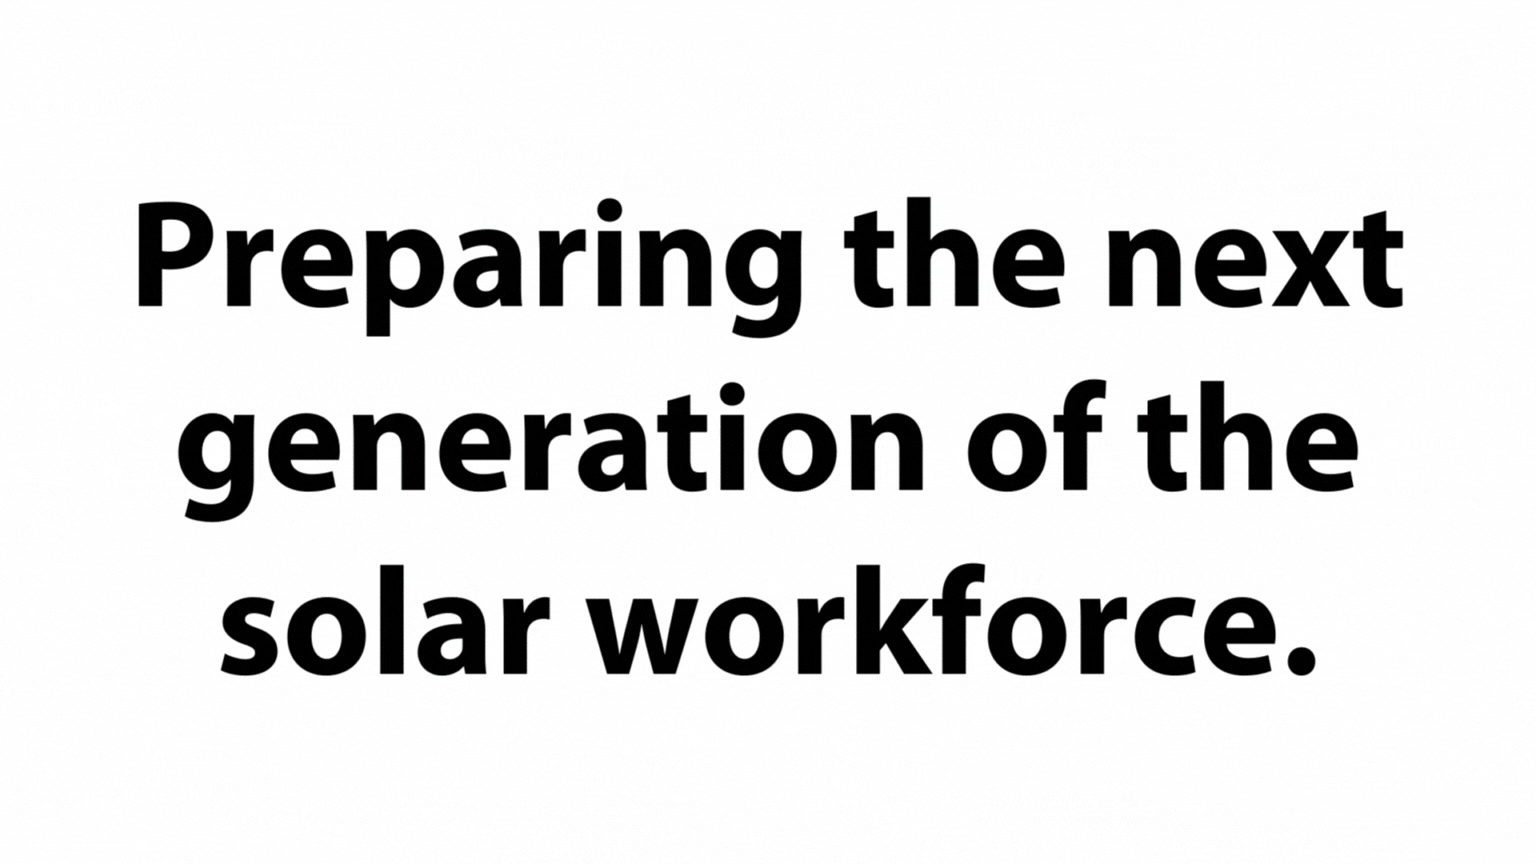 Preparing the next generation of the solar workforce.